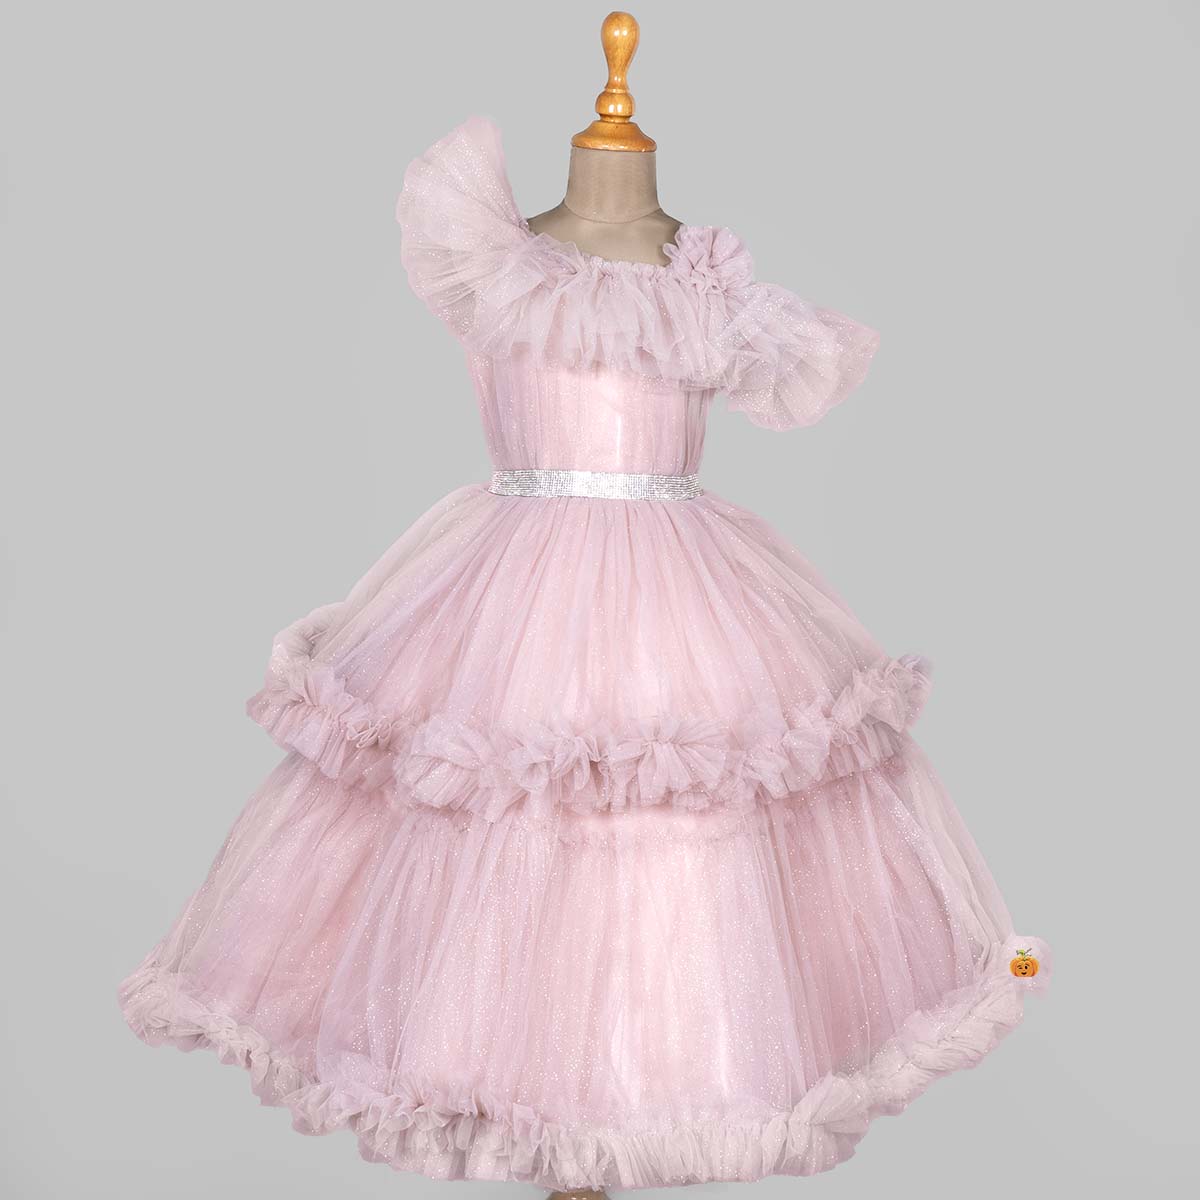 Designer Ball Gown Dresses For Women At Online Sale Prices :  https://www.dress212.com/ball-gown-dres | by Dress212 LLC | Medium